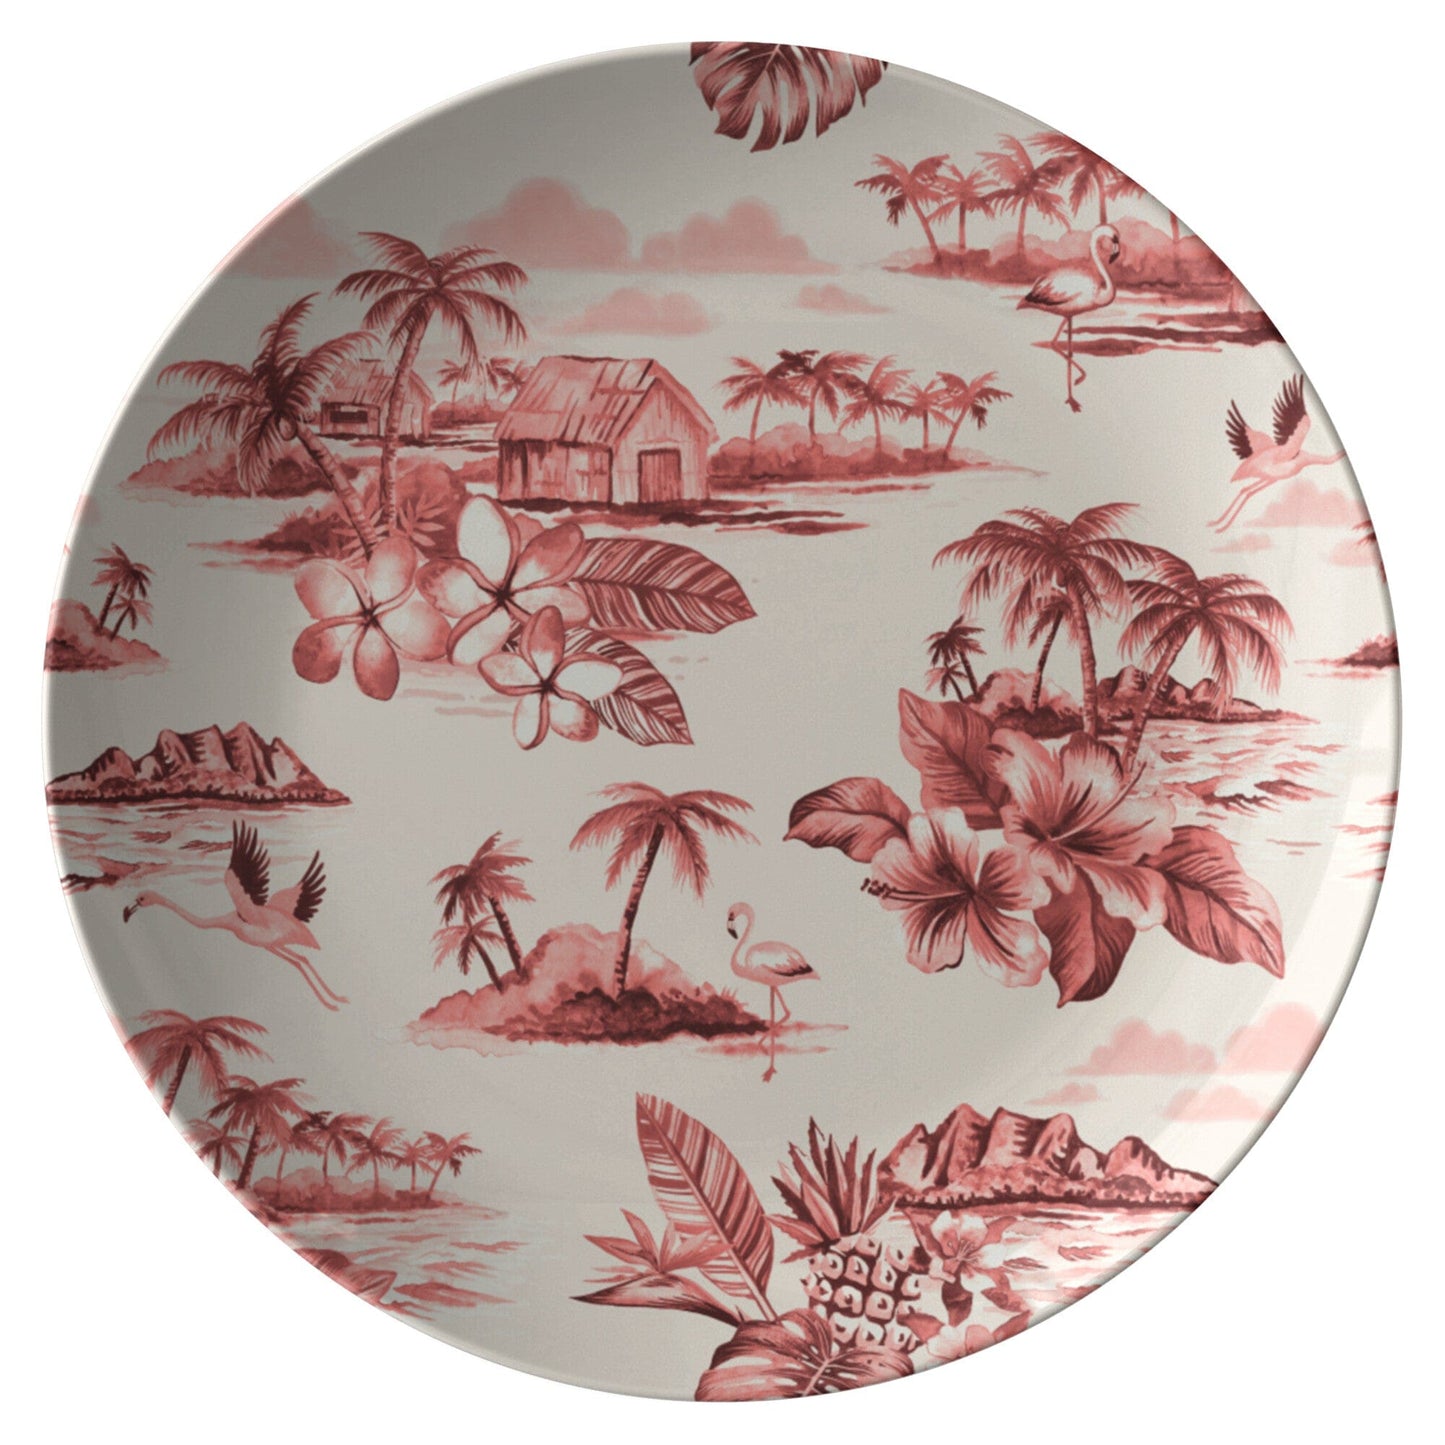 Kate McEnroe New York Dinner Plate in Vintage Hawaiian Tropical Island Scenes Plates